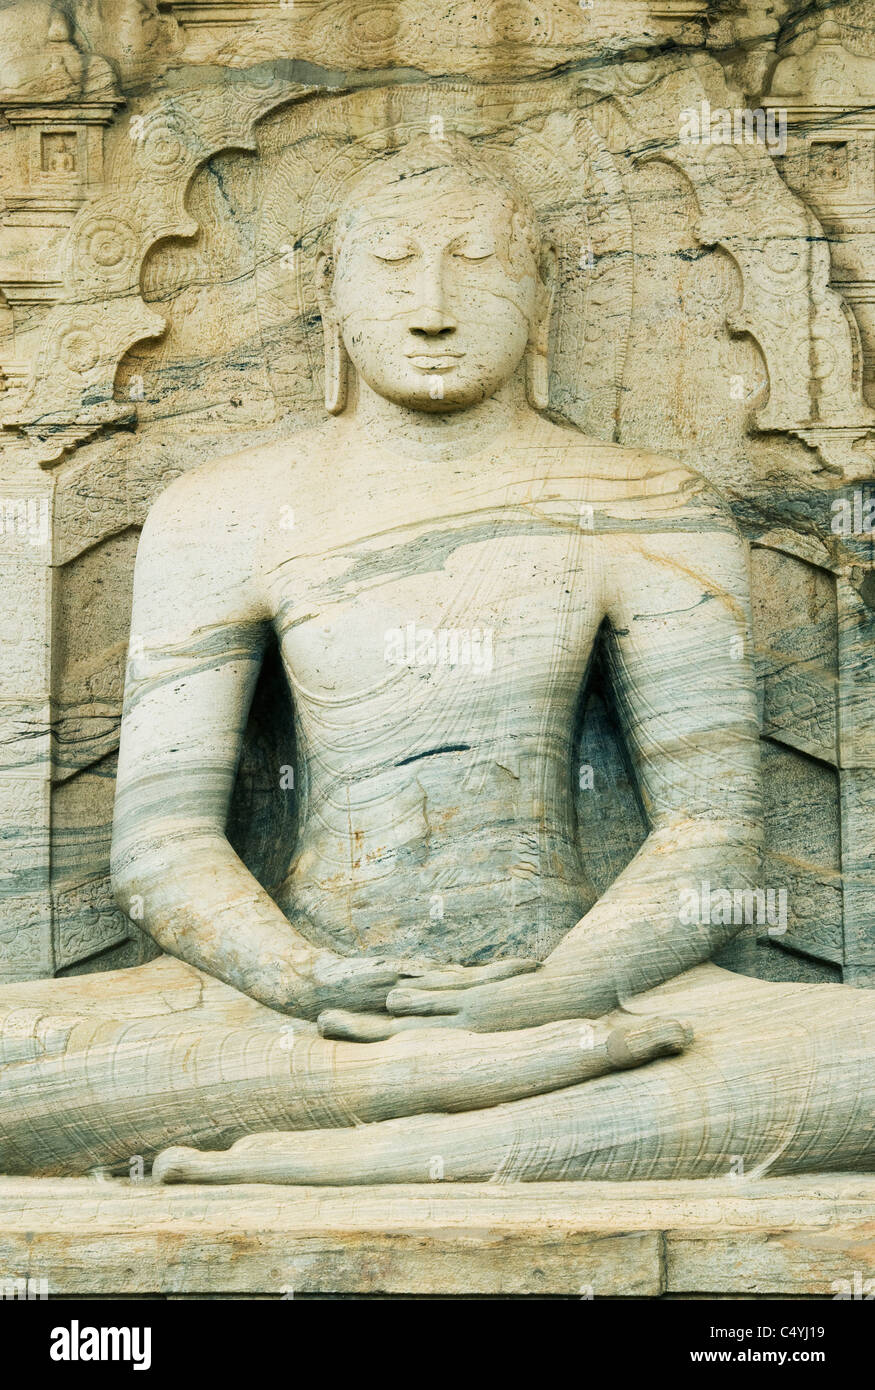 Stein Buddha, Gal Vihara, Polonnaruwa, Sri Lanka-UNESCO-Welterbe. Stockfoto